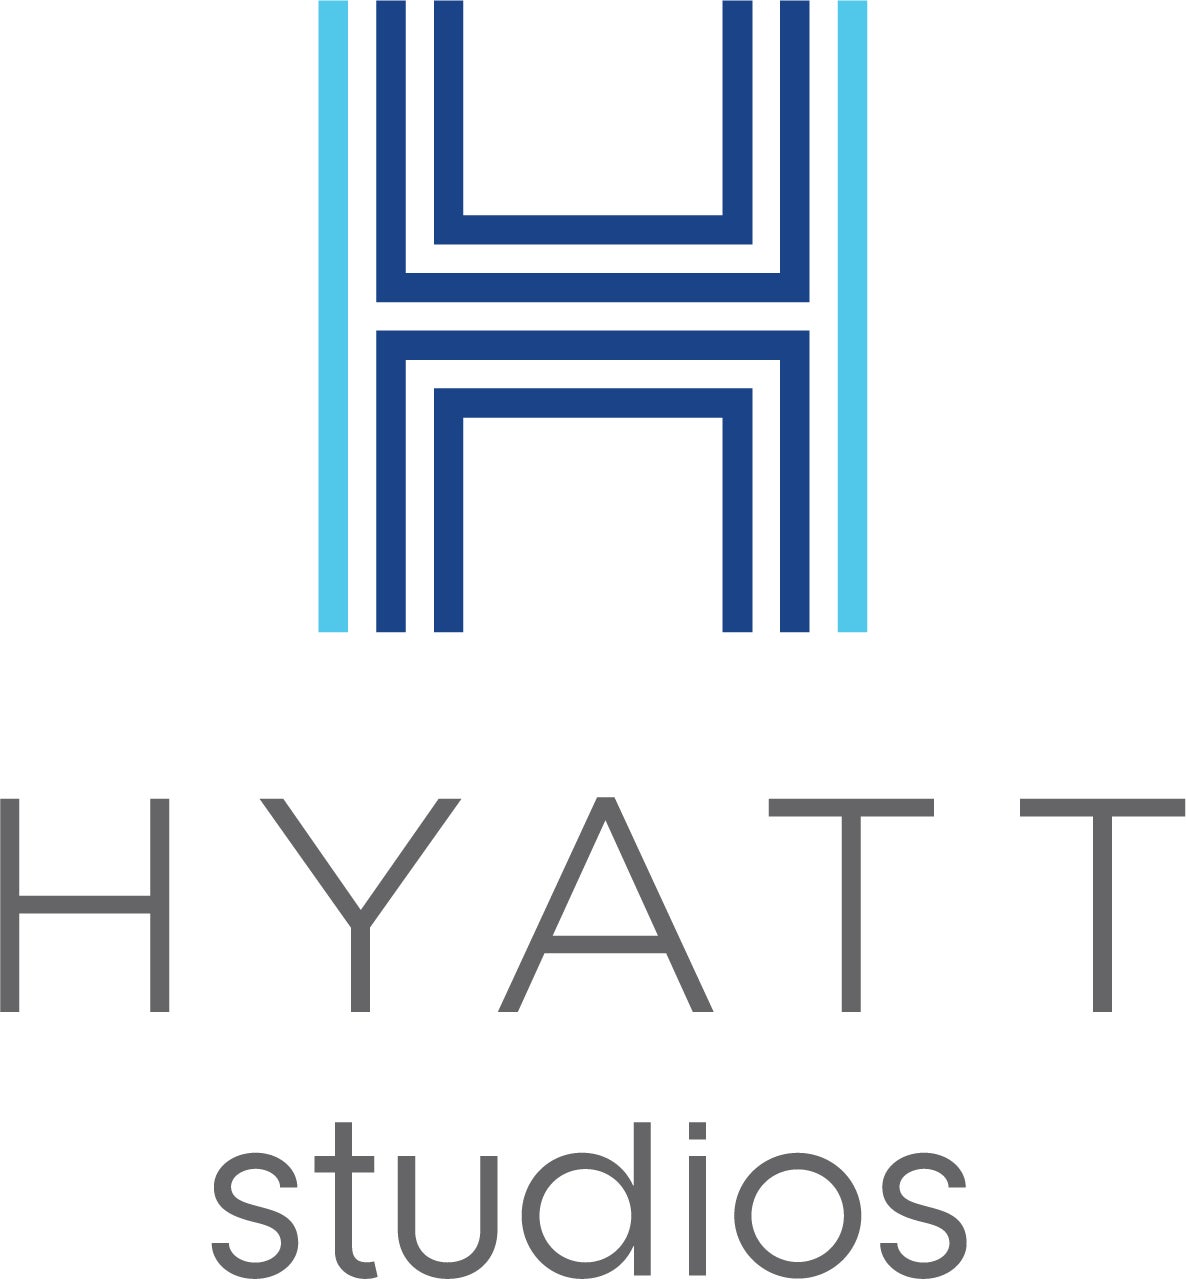 「HYATT studios」ロゴマーク